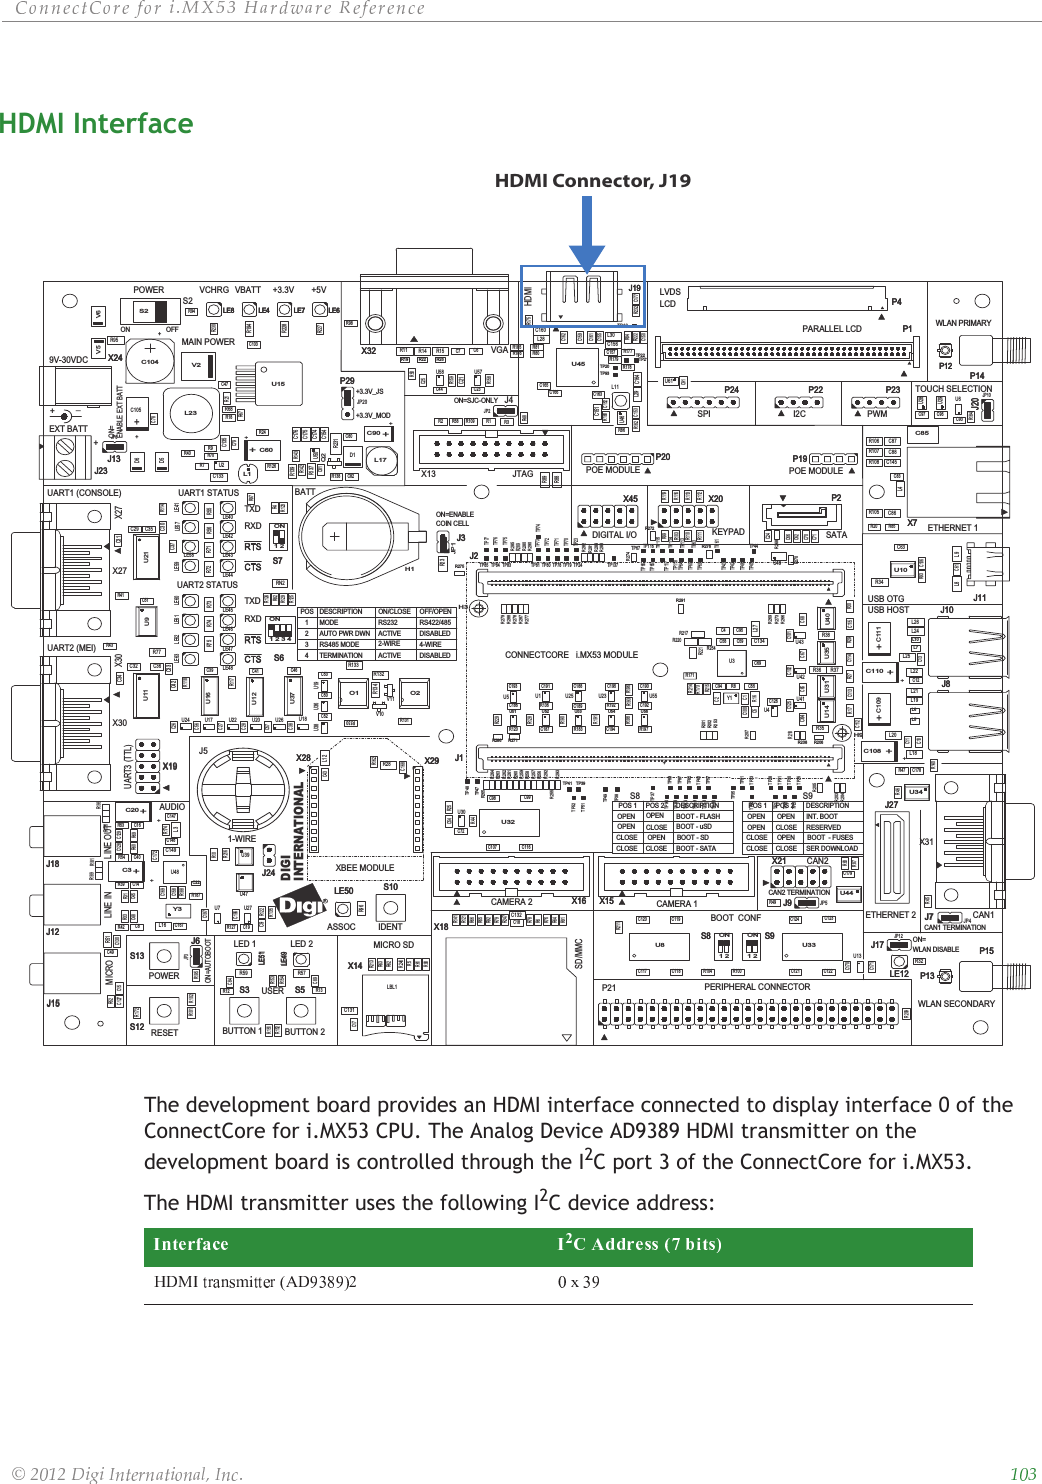 ȱ ȱ ȱ ȱ ȱ ȱȱ ȱ ȱ ȱ ȱȱȱHDMI Interface The development board provides an HDMI interface connected to display interface 0 of the ConnectCore for i.MX53 CPU. The Analog Device AD9389 HDMI transmitter on the development board is controlled through the I2C port 3 of the ConnectCore for i.MX53.The HDMI transmitter uses the following I2C device address:RU3U50ON41 32S6ON1 2S7ON1 2S8ON1 2S9S5S3S13S10H9H3D1U21U11Q2U8 U33U32X18P24 P22 P23P29X24J1J2P1P21X19X21X45 X20J24J13J17J6J20J7J9U13U52 U53U51 U54U7U55U56U29U28U61U19U24U38U43U42U41U4U20U22U17U36U18U26U6U2U15JP6JP20JP1JP3JP10JP4JP12JP5J19X32X29X28X7P20J11P19R139J27J10J8L8L26L27L21L19L22L20L25L24L18L28L29L9L12L16L3L4D5V5 V6D6P12P13S12V2X30X27X31X14X16 X15X13U46U10U35U31U14 U40LE59LE62LE63 LE61 LE41LE57LE60LE58LE7 LE6LE4LE8LE51LE49LE40LE43LE42LE44LE47LE48LE45LE46LE12LE50J23P14P15J15J12J18V10V11O1 O2R130R131R51R133R134R28R228R56R71R75R77R74 R55R73R59R72R57R194R96R70R18R132R14R106R108R107R105R15R11+C60+R52R84R41C2C1P2R45R49+C3+R187R189R138R159R188R5R6R7C88C87C145C86R16R42R31R39R33RN2C85R127R8R9R36 R37R34R38R35R95R89R88U37U12U16U45S2C25P4C104+C49C129R53C127C48 C45R182C7 C6L10L6L7L5R142R86+C109++C108++C110++C111+C105++C90+R20R181R176R12 R13R85R94R195R102R101C81C103C120C169C43C53C39C27C159C161C106C46C28C162C57C155R222C163C113 C114 C115C126C101C125 C102C69C100C95C94C59C51C56C41C26C18C50C38C83C55C58C44C89C171C78C166C165C177C84C170C52C196C118C17C123C187C98C167C117C119C79C121C188C191C179R50C99C194C97C122C189C195C158C193C186C124C96C197C80C91C93C178R199C148C147C116C107C190C192C168C112R30R17R93R27 R29R135R122R10U9+C20+R246R247C150Y1C153C22L23R143Y3C151C164R23C132C134C160C131C176C175C154C174C135C133C149C70C13C12C47C61C11C71C10C62C66R118R172R4R123R61R62R63R90C23R48R117R64R76R78R141R66R79R121R65R92R91R217R21R221R100R211R110R103R99R113R2R111R126R119R25R184R104R112R1R116R220R254R154R153C157C54R137L17J5U48U47U39U34U44U25U1 U23U27U5R231R204R205R218R208R289R275R274R278R287R273R261R269R206R253R202R281R203R285R290R277R284R266R257R280R282R258R259R260R276R268R22 R26R19R286R283R201R262R263C128R256R265R264R207R271R158R288R272R279R291R177R213R175R179R43R178R140R209R180R232R44R47R98R58R83R24R46R270R40R174R87R109R114R3R97R129R82R124R125R152R68R151R191R227R32R193R190R196R136R230R183R192R128R120R198R229R197R162C82C37C35C15C65 C67 C68C36C4C5C42C29C32C34C33C64C31C156C9C63C19C30C8C14C172R81R80R186R185R67R216C152C130L11L1U57LBL1J4R173R214C24JP2R292C16R69R60L30R215R171U49C21U30J3C72H1R255R293U58R54 C40TP83TP85TP61TP90TP114TP67TP66TP115TP69TP116TP71TP117TP74TP78TP80TP63TP118TP64TP22TP21TP20TP19TP46TP72TP45TP60TP43TP84TP42TP79TP65TP73TP113TP137TP70TP23TP24TP81TP47TP48TP77TP76TP75TP93TP38TP49TP52TP51TP39TP41TP25TP82TP89TP87TP62TP29TP30TP31TP28TP91TP33TP35TP57TP26TP37TP88TP86TP68TP58TP36TP92TP27TP44X14J17 P15S8CAN2SATAPWMON=WLAN DISABLEJ19J12POWERX27ON=P29S9S9S5_I2CX21CLOSERXDJ1+3.3V_JSSER DOWNLOADJ18+3.3V_MODDIGIJTAGS8IDENTDISABLEDUSERP22+LINE OUTUART3 (TTL)AUTO PWR DWNJ13+VCHRGON/CLOSEP4RESERVEDCAN1 TERMINATIONTXDCLOSEUART1 STATUSX30OPENP12UART2 (MEI)LE51ETHERNET 1SD/MMCOPENX209V-30VDCSPI3LE49X15RS485 MODE+5VDESCRIPTIONVBATTJ81DISABLEDJ10MAIN POWEROPENP24J11LE8BOOT - SATAACTIVEPOS 1OPEN4BUTTON 12-WIRES6LVDSLCDOFF/OPEN4-WIREACTIVEX32POSINT. BOOTVGADESCRIPTION2MICRO SDX28WLAN PRIMARYJ27ON=ENABLECOIN CELLX45MICRO1-WIREJ15INTERNATIONALETHERNET 2LE50CAN1WLAN SECONDARYPOS 2J9P1OPENX29J24LED 2LE4X18S13PARALLEL LCDS3S12XBEE MODULEOFFP2J2ON=AUTOBOOTJ20i.MX53 MODULEPOS 1J7CLOSE OPENRXDCLOSEUART2 STATUSBOOT  - FUSESX16RESETTERMINATIONP14LINE INHDMIX19CLOSEASSOCCLOSE CLOSEBOOT - FLASHPOS 2LED 1CAN2 TERMINATIONS7OPENX7BOOT - uSDBOOT - SDJ6BUTTON 2J23P23S2LE6LE7S10KEYPADMODECAMERA 2RS232CONNECTCORERS422/485EXT BATTENABLE EXT BATTX24TOUCH SELECTIONDESCRIPTIONONUART1 (CONSOLE)+3.3VPOWERLE12CLOSEDIGITAL I/OTXDPERIPHERAL CONNECTORCAMERA 1BOOT  CONFUSB OTGUSB HOSTON=SJC-ONLYAUDIOJ3POE MODULEP19POE MODULEBATTOPENP20P13HDMI Connector, J19